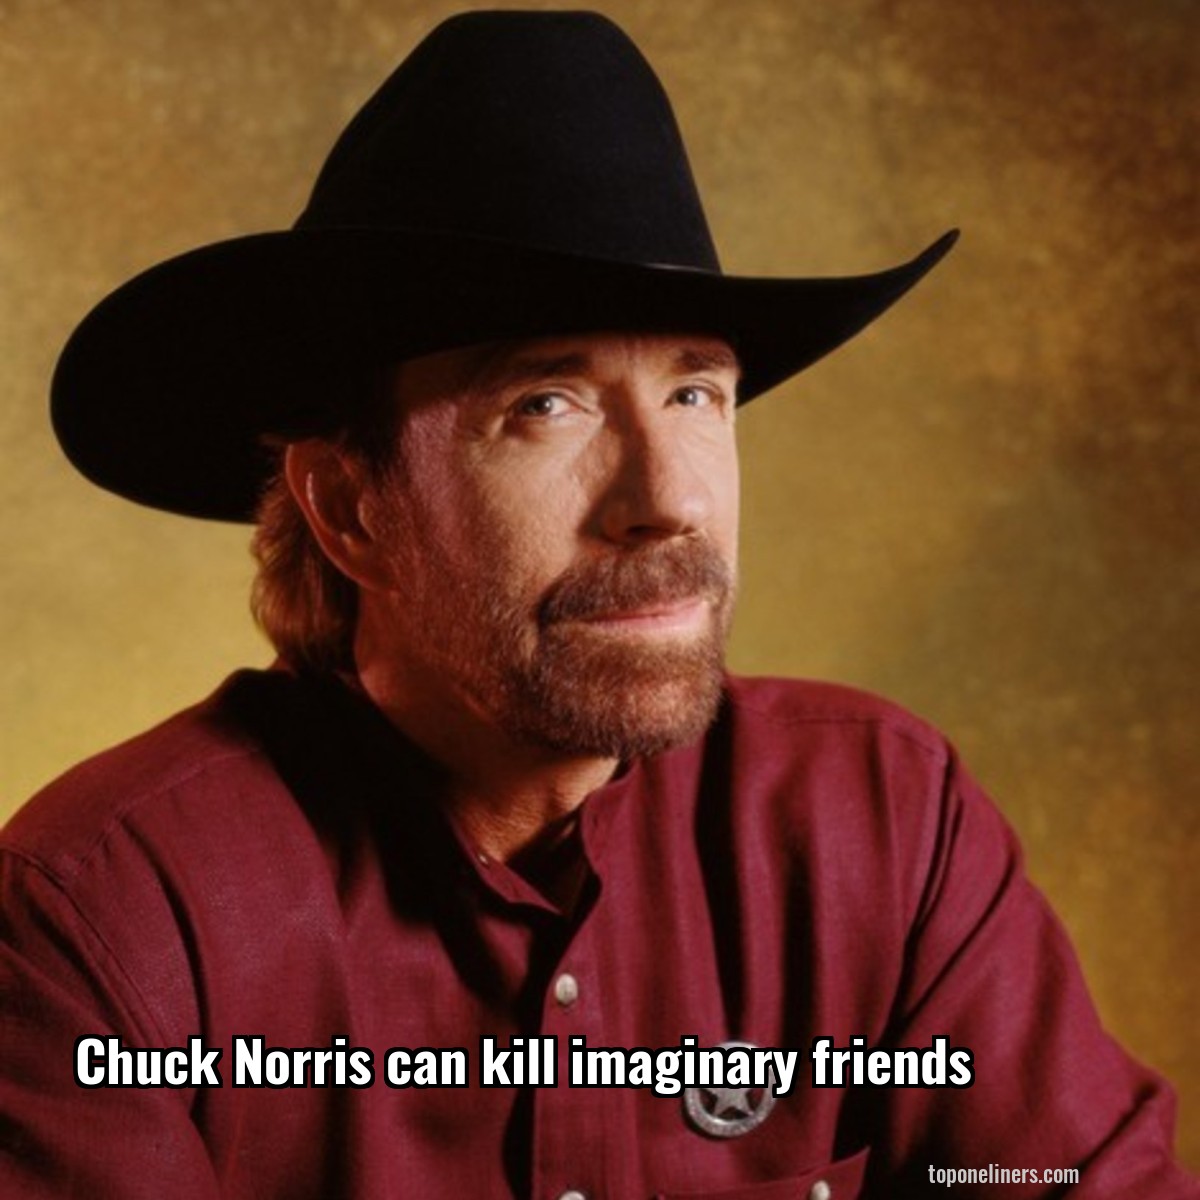 Chuck Norris can kill imaginary friends